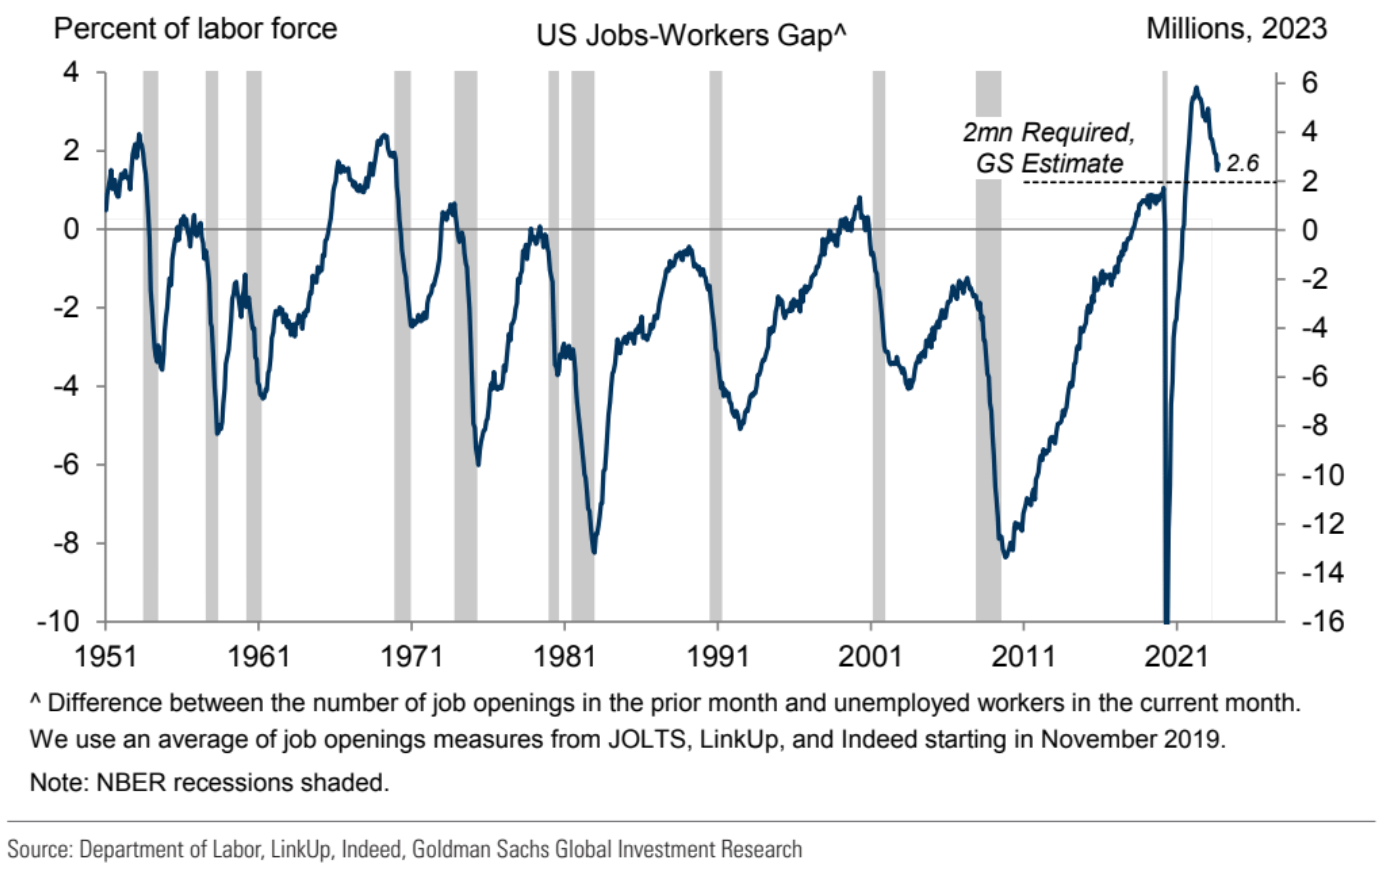 Goldman Sachs Job-Workers Gap